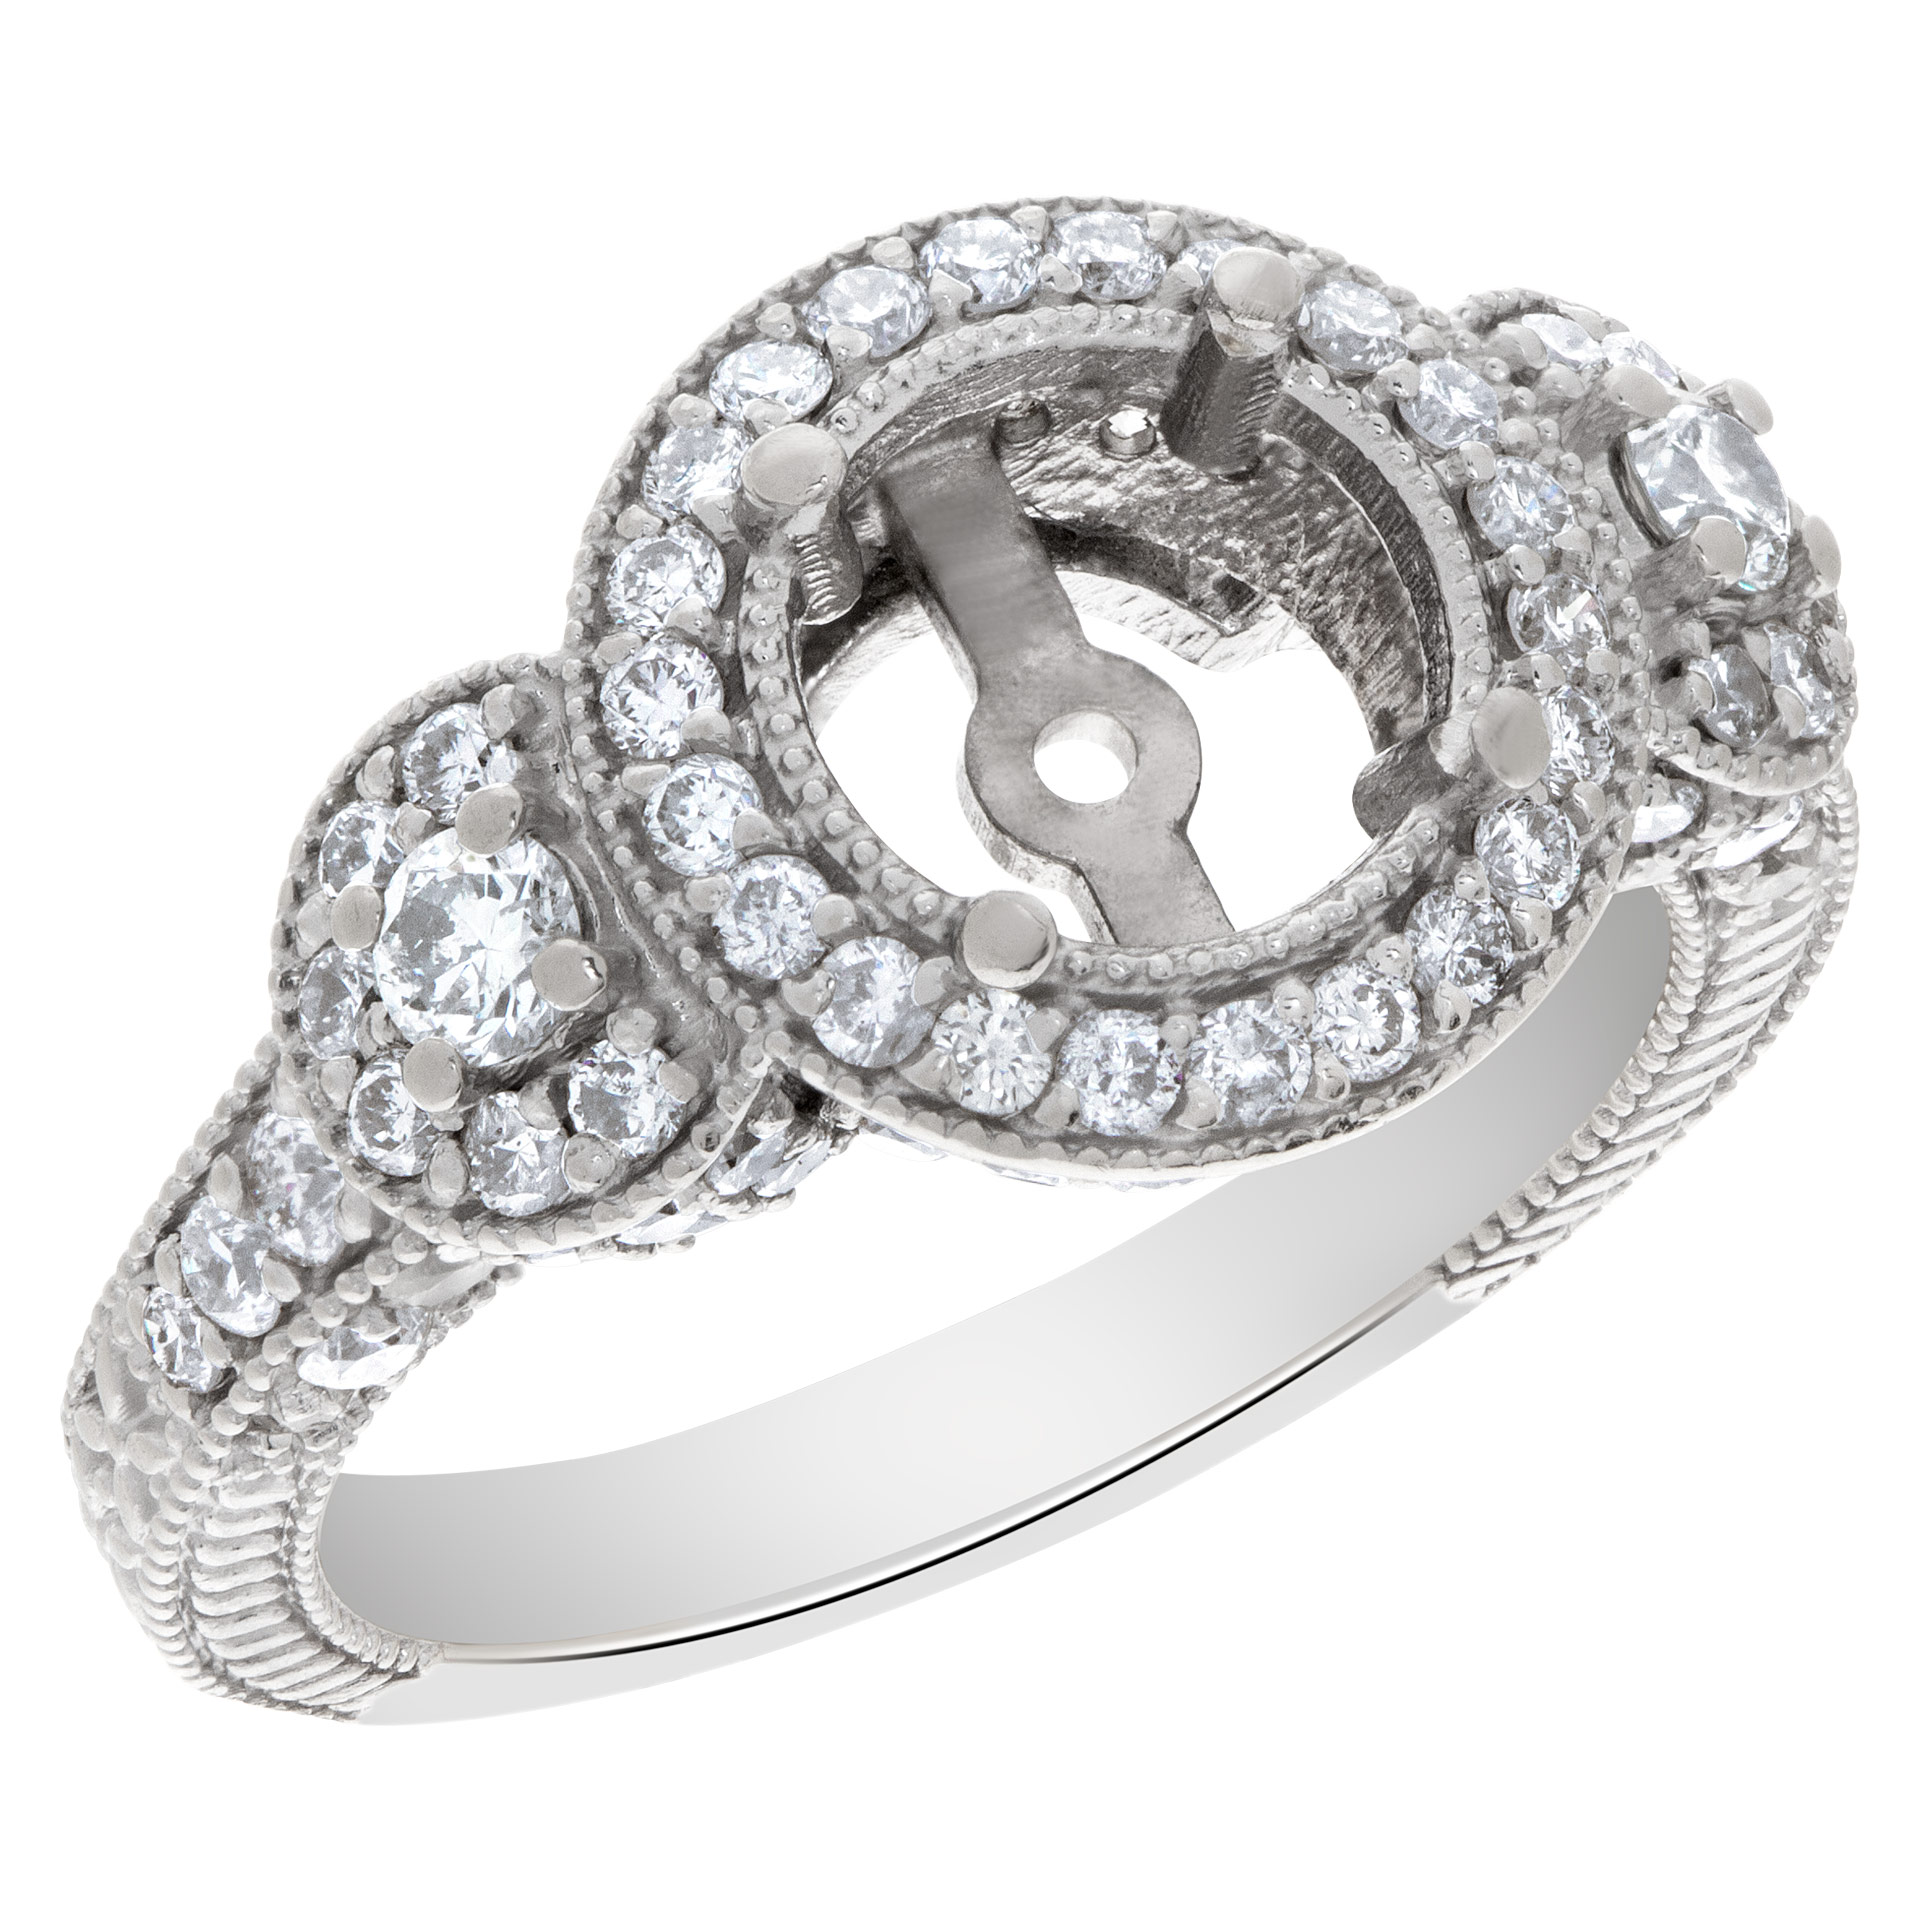 Beautiful diamond setting with approximately 1 carat full cut round brilliant diamonds, set in 14k white gold image 1